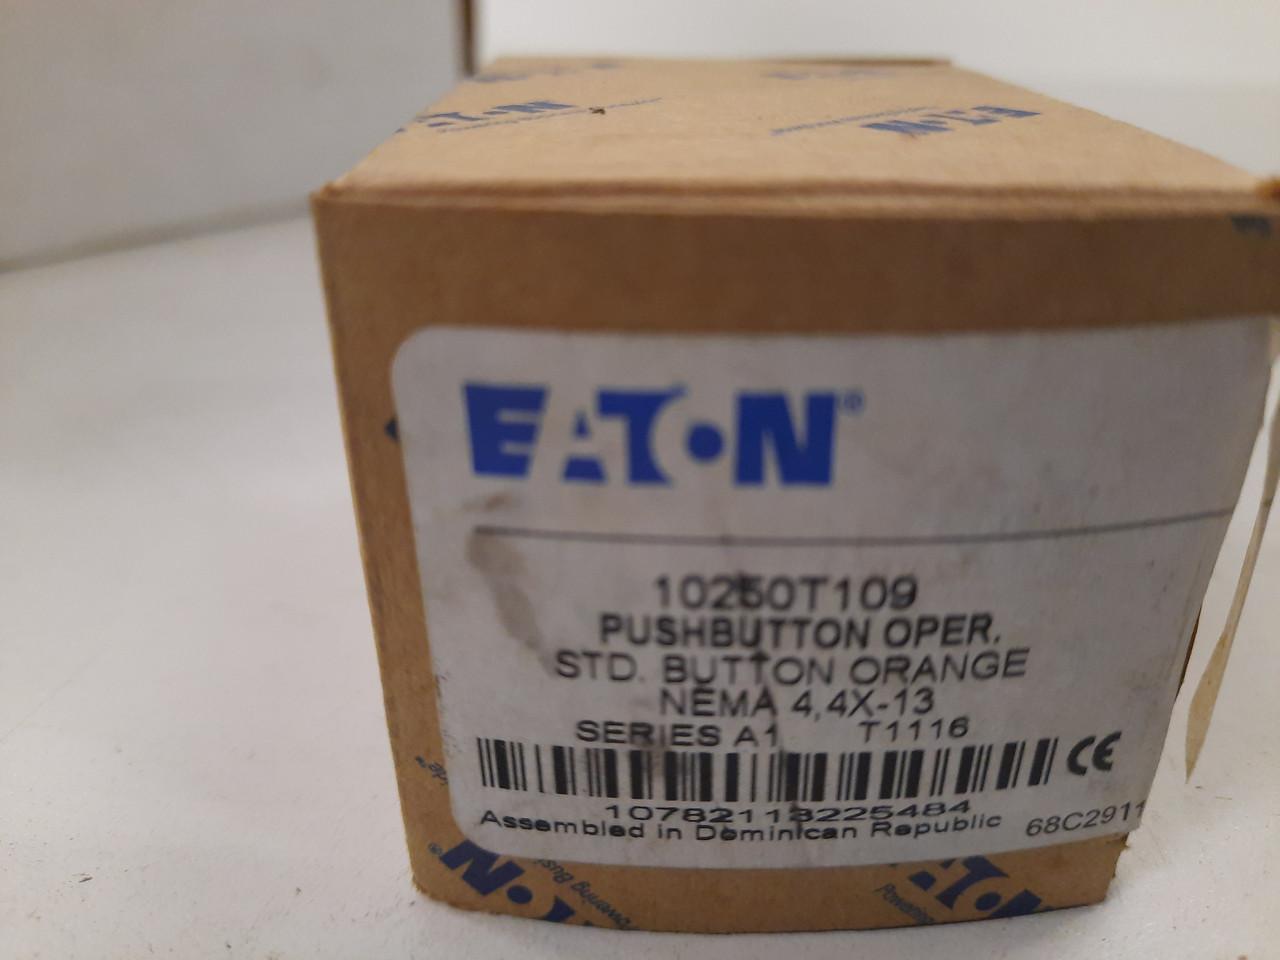 Eaton 10250T109 Eaton - 10250T109